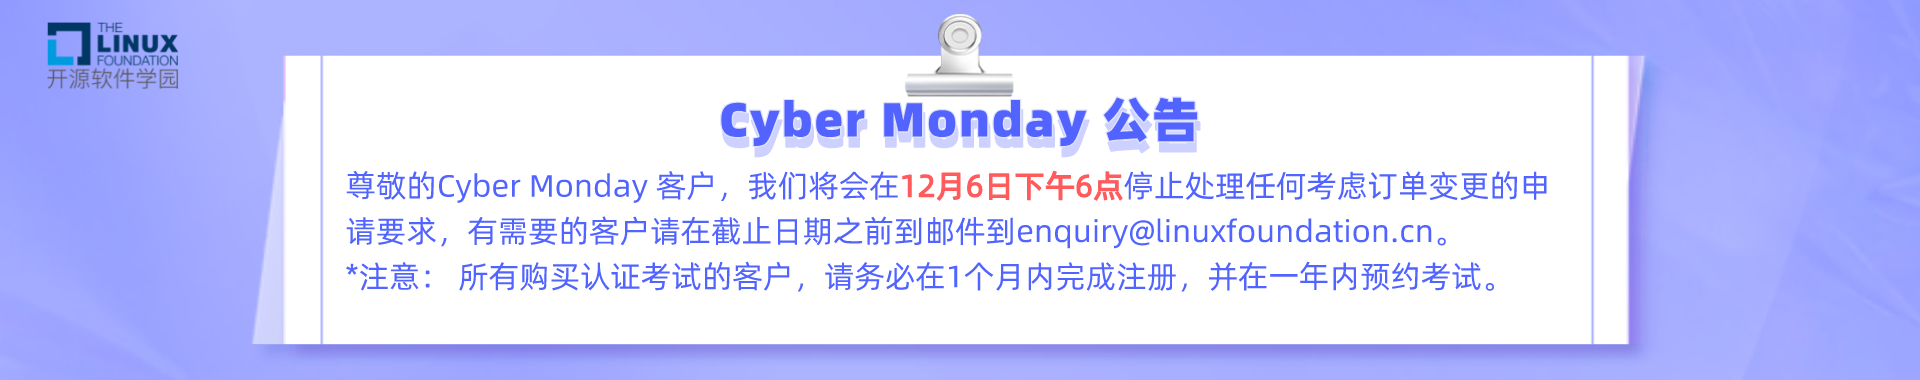 LFOSSA中国区Cyber Monday公告